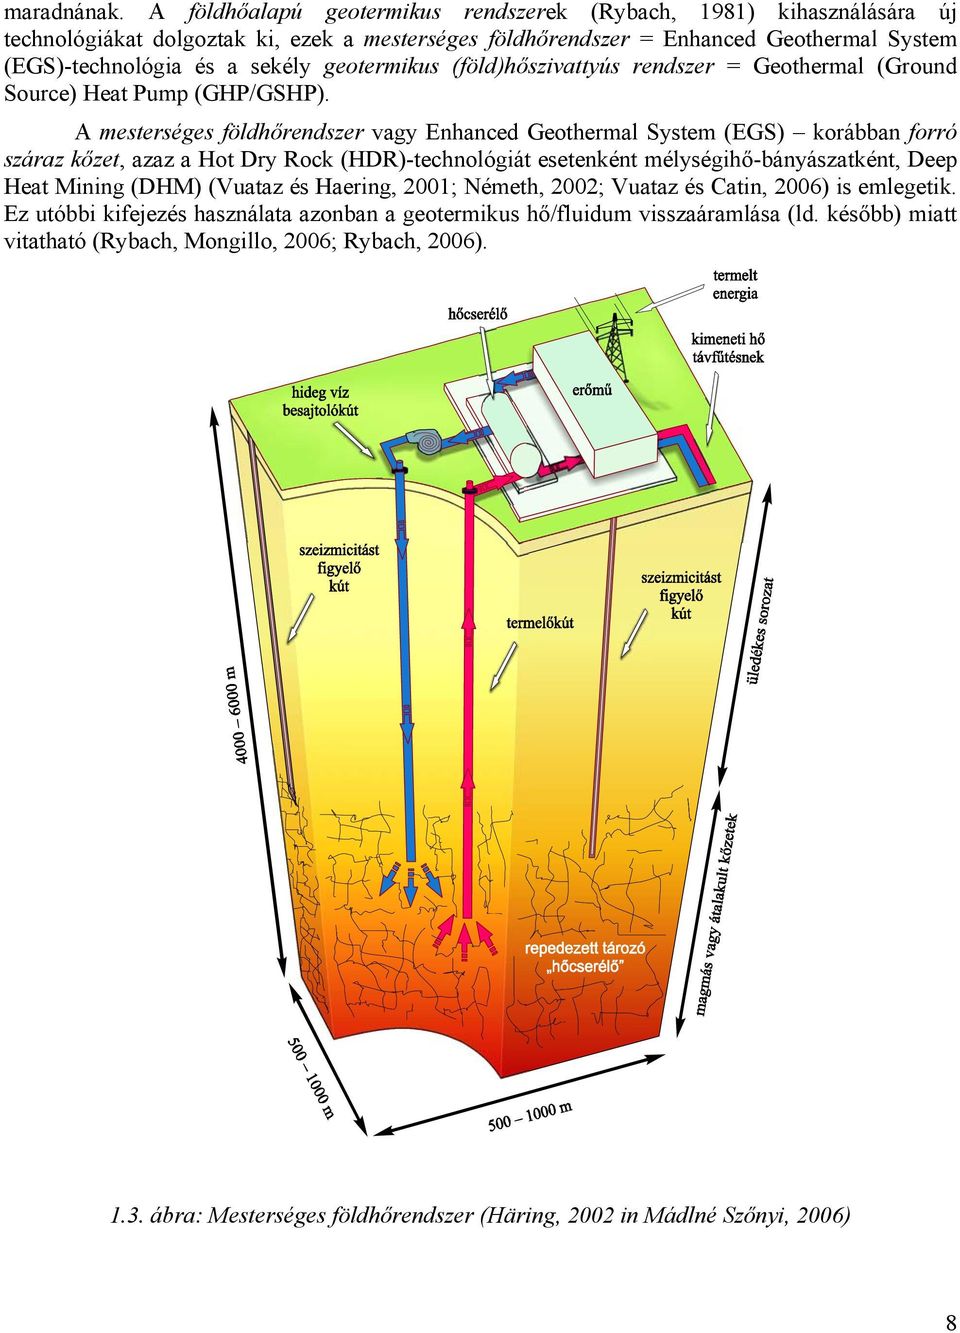 geotermikus (föld)hőszivattyús rendszer = Geothermal (Ground Source) Heat Pump (GHP/GSHP).